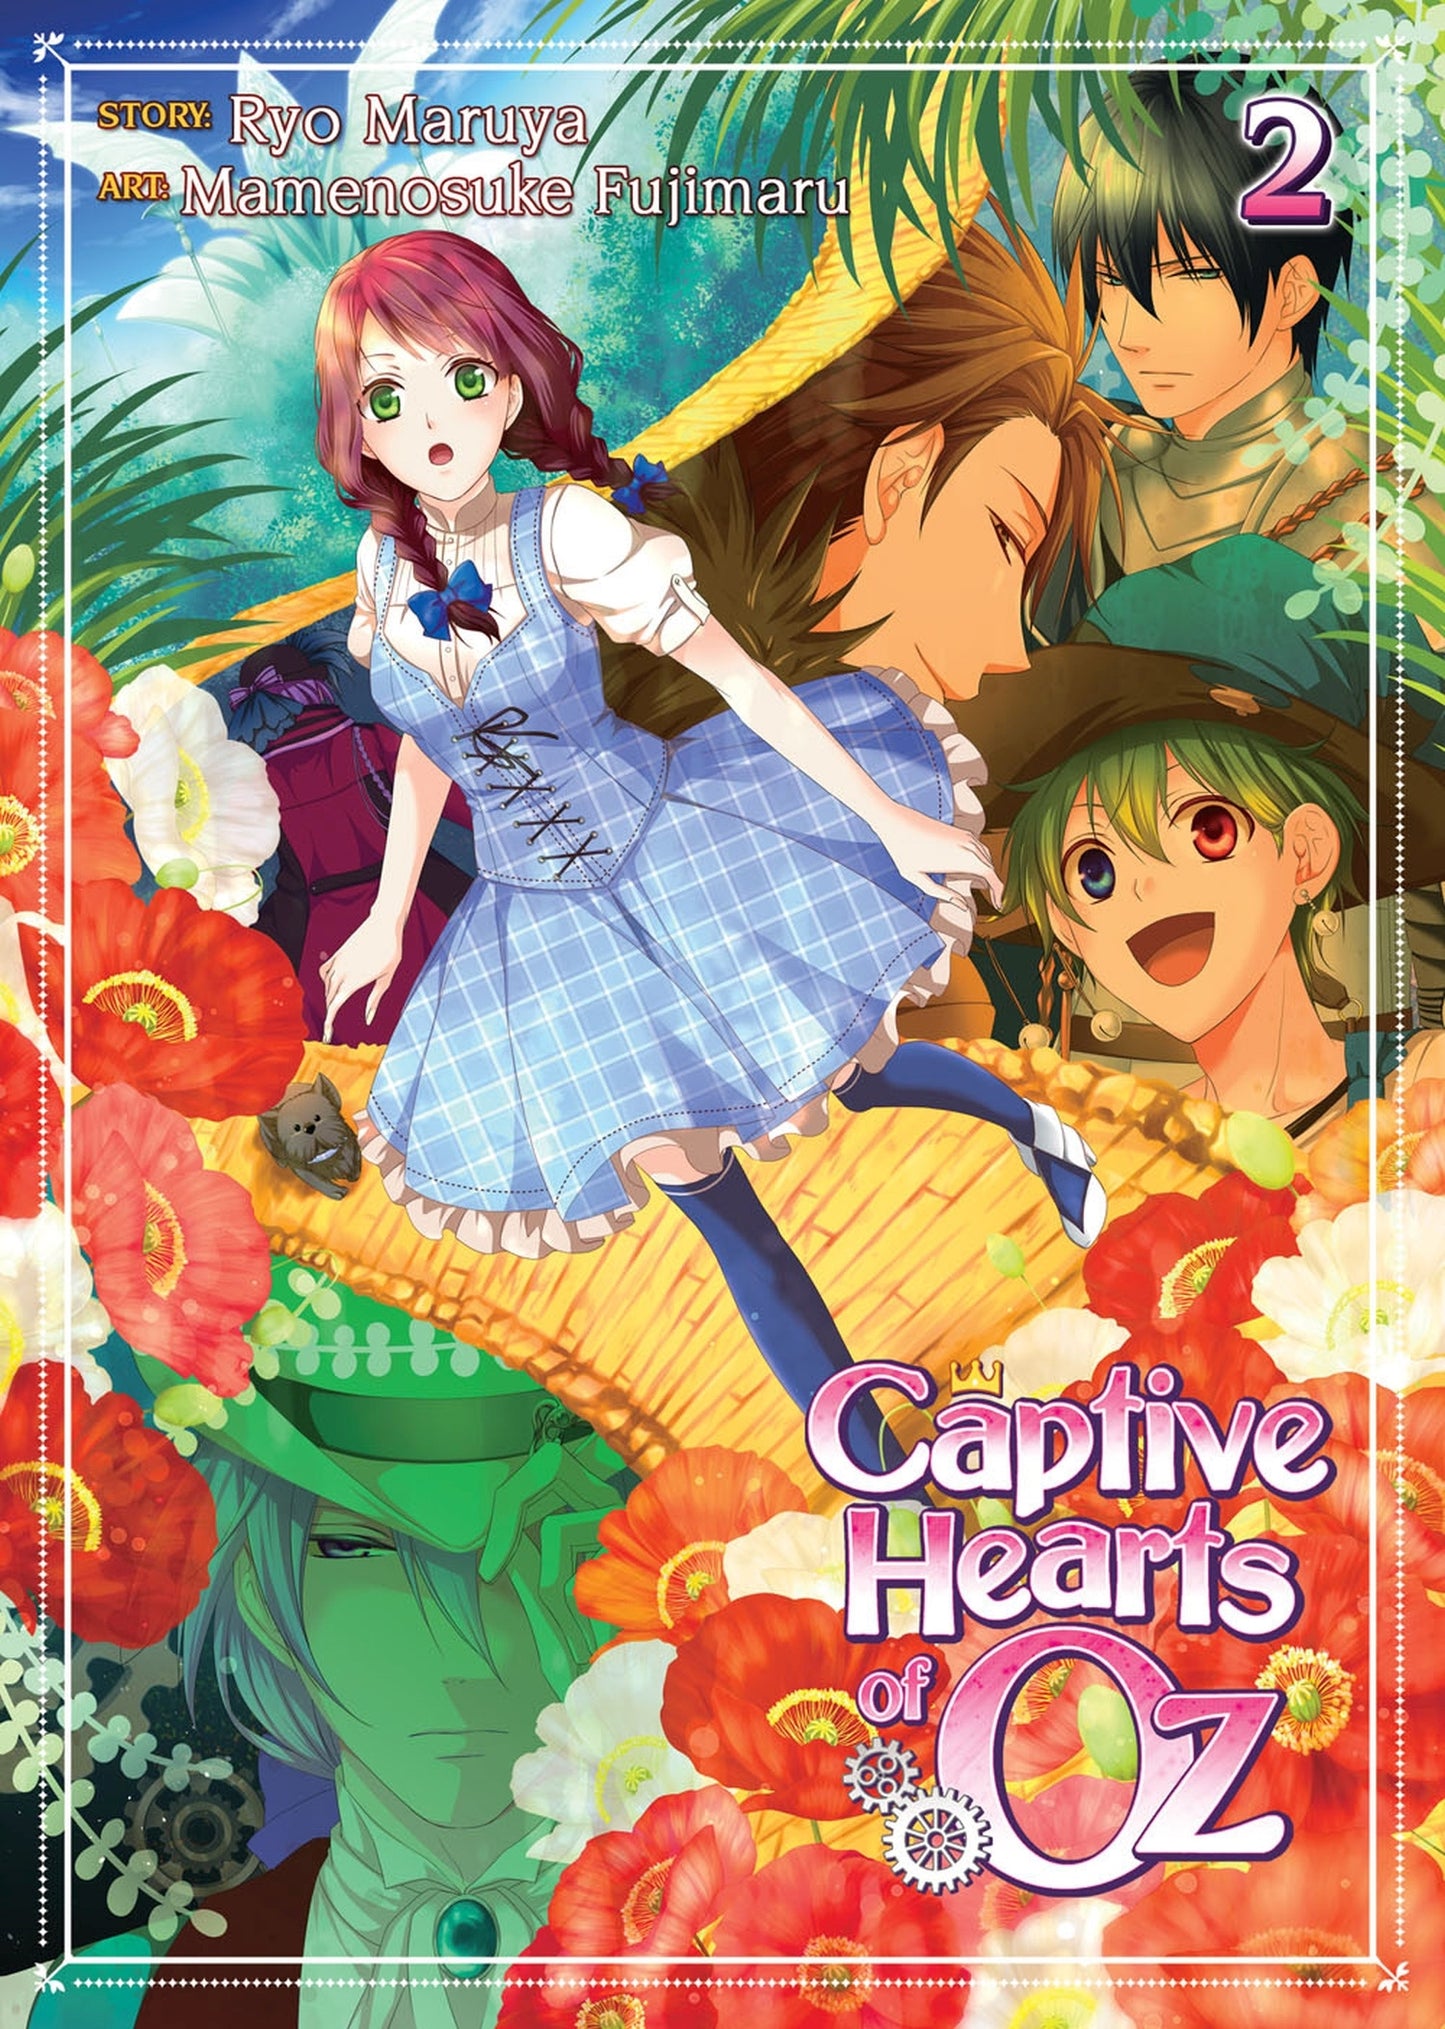 Captive Hearts of Oz Vol. 2 - Manga Warehouse